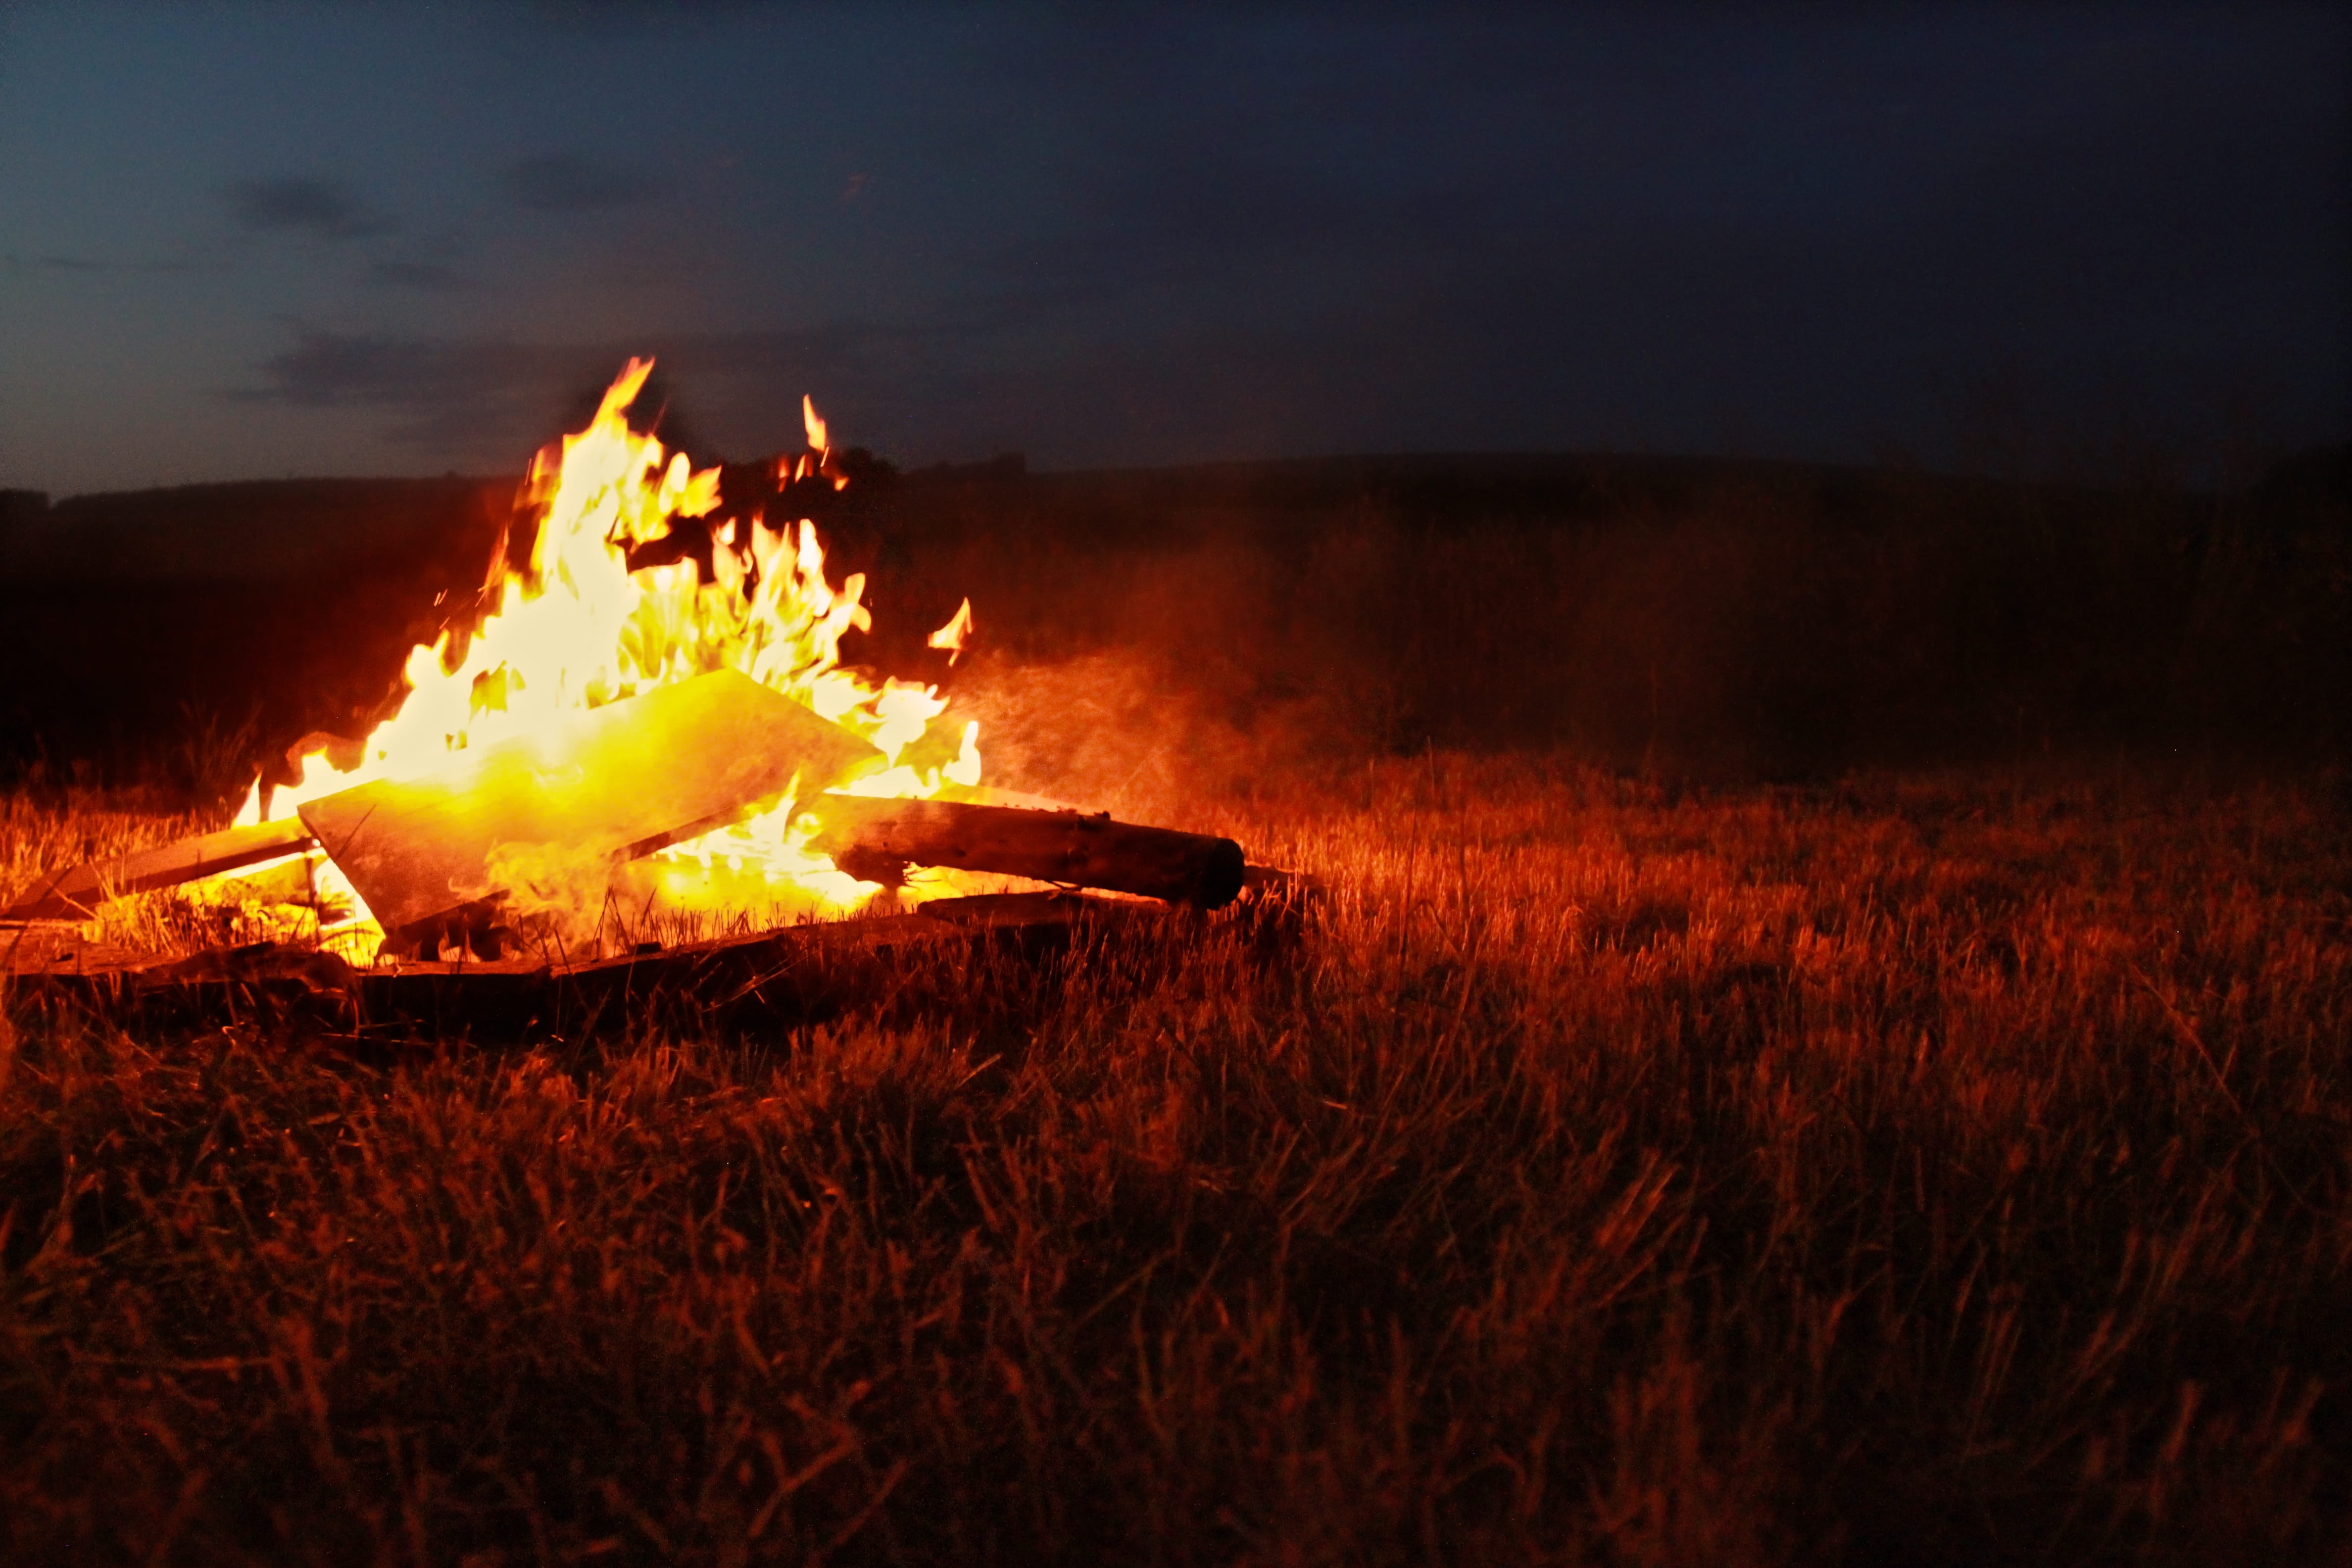 Fire, Bonfire, Flame, Hot, Burn, campfire, warm, night, wood